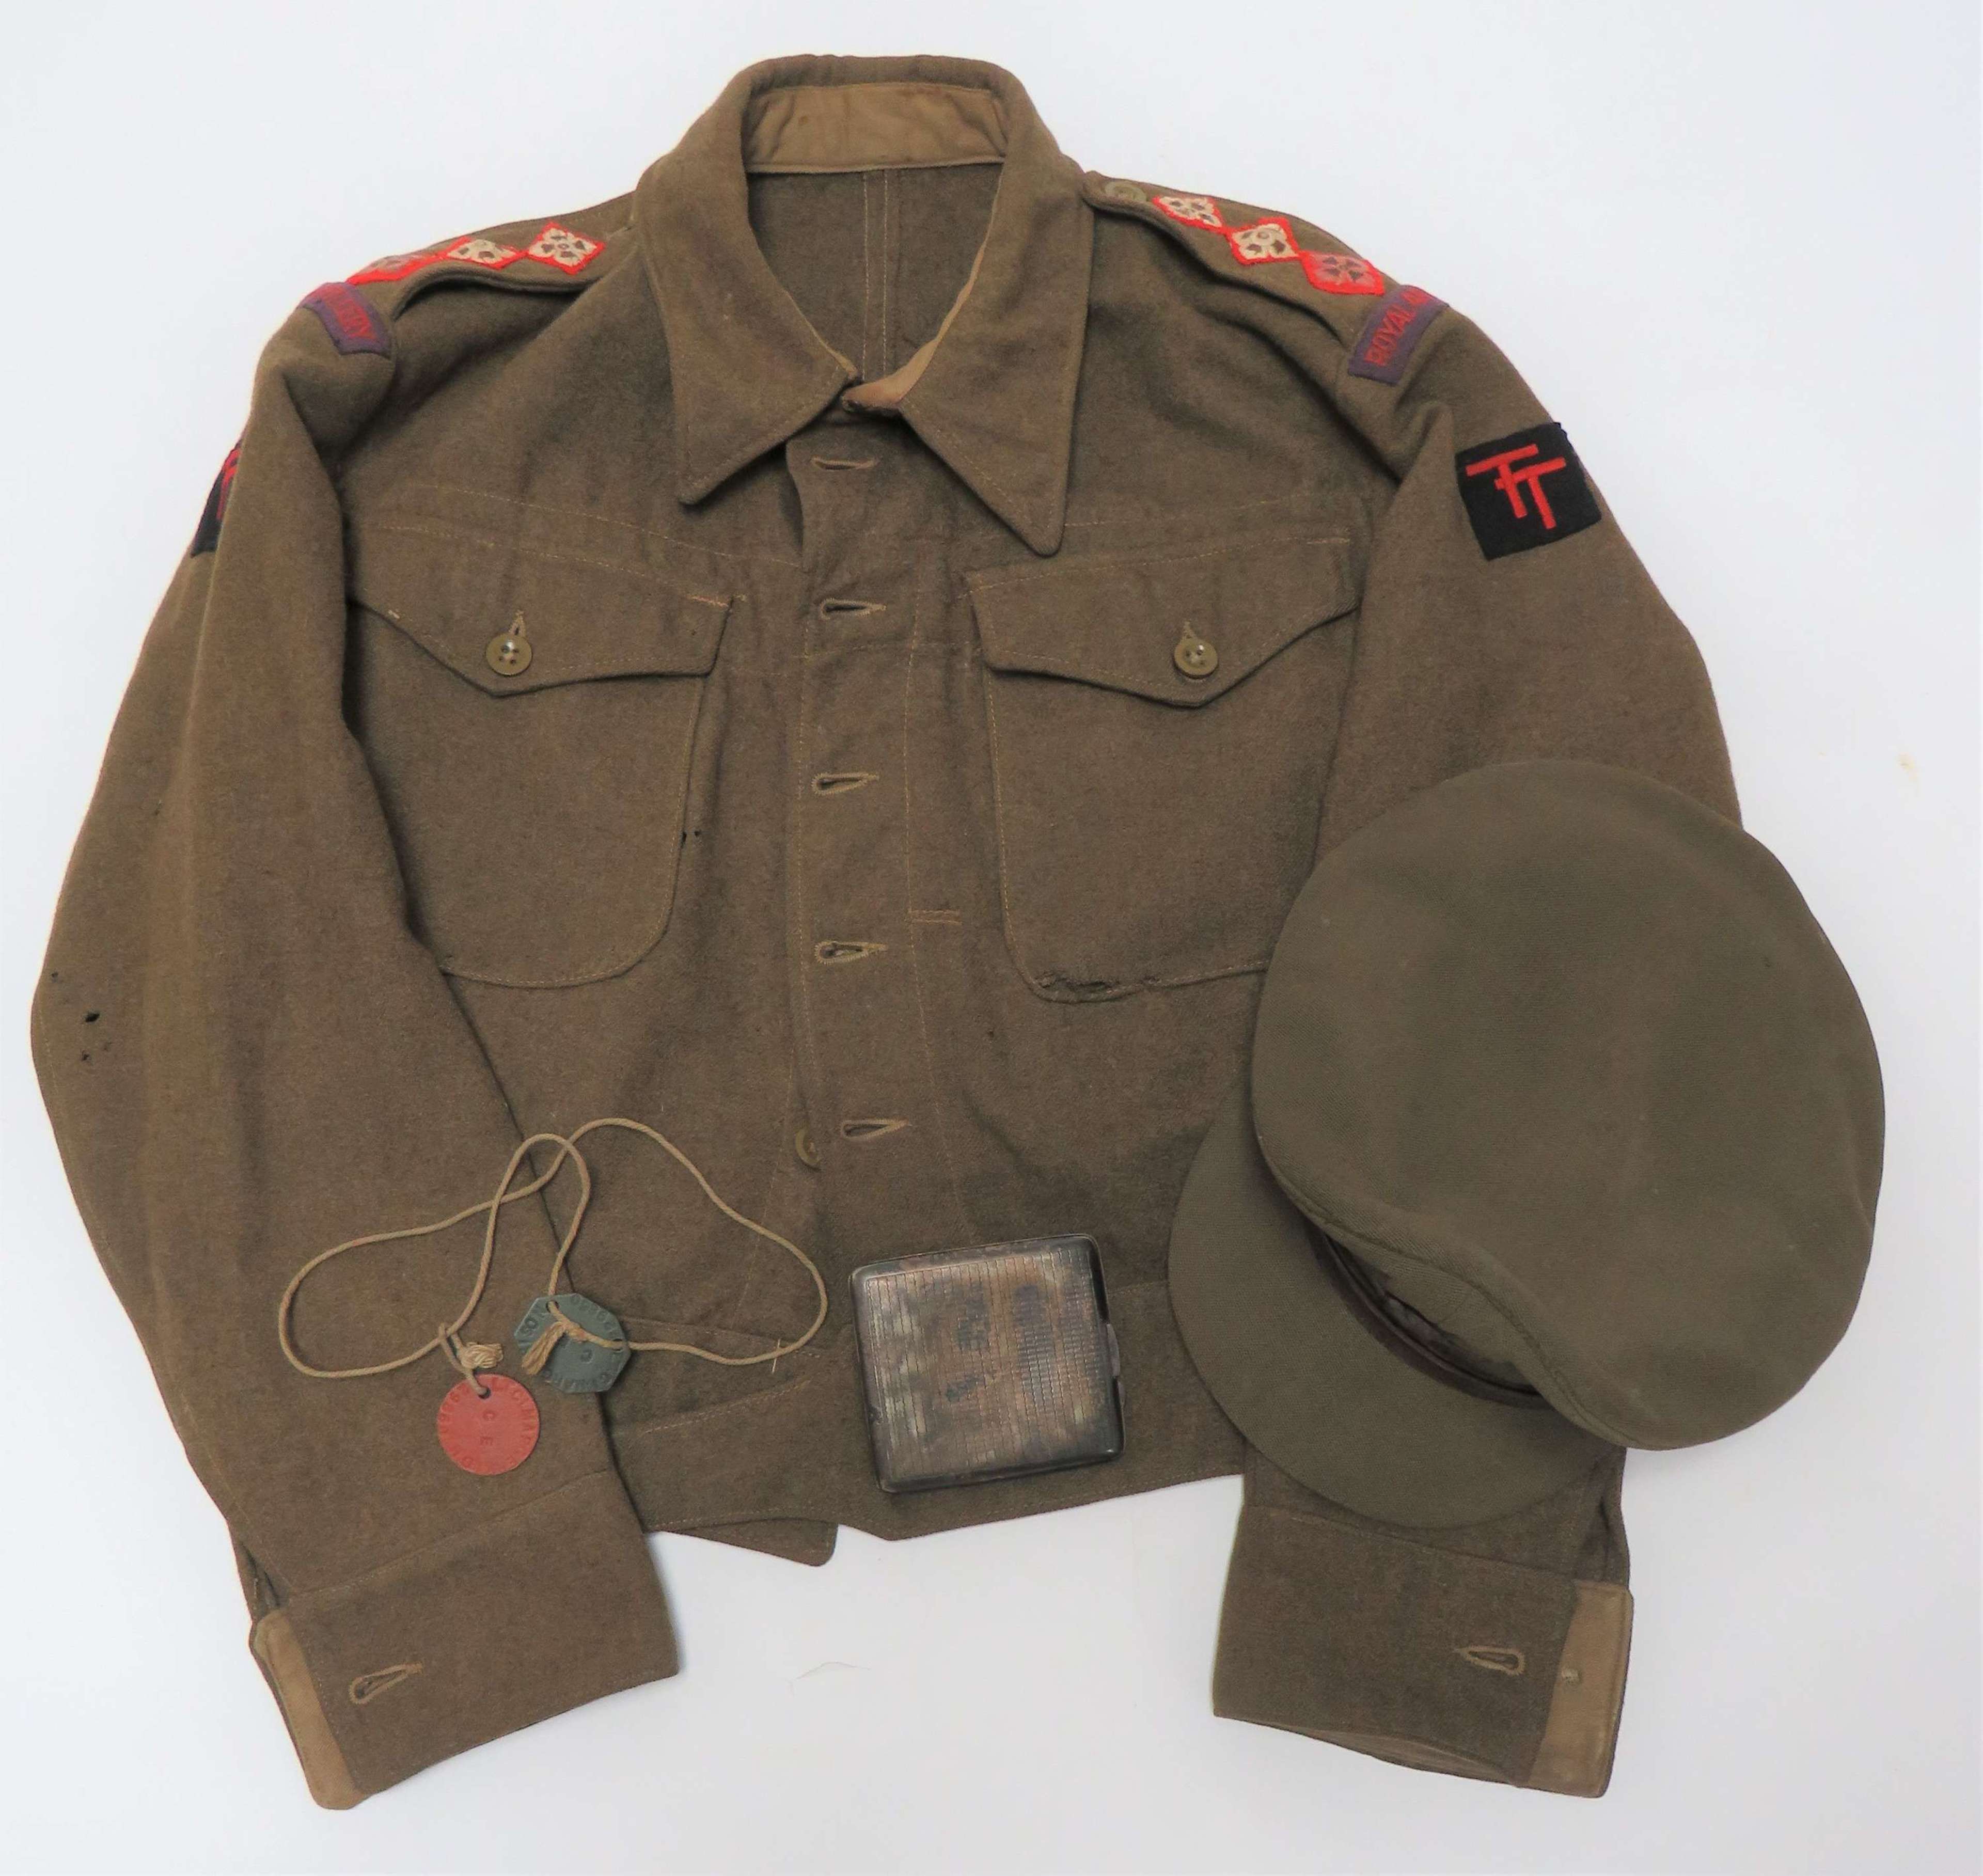 Attributed 50th Division Royal Artillery Battledress Uniform Set